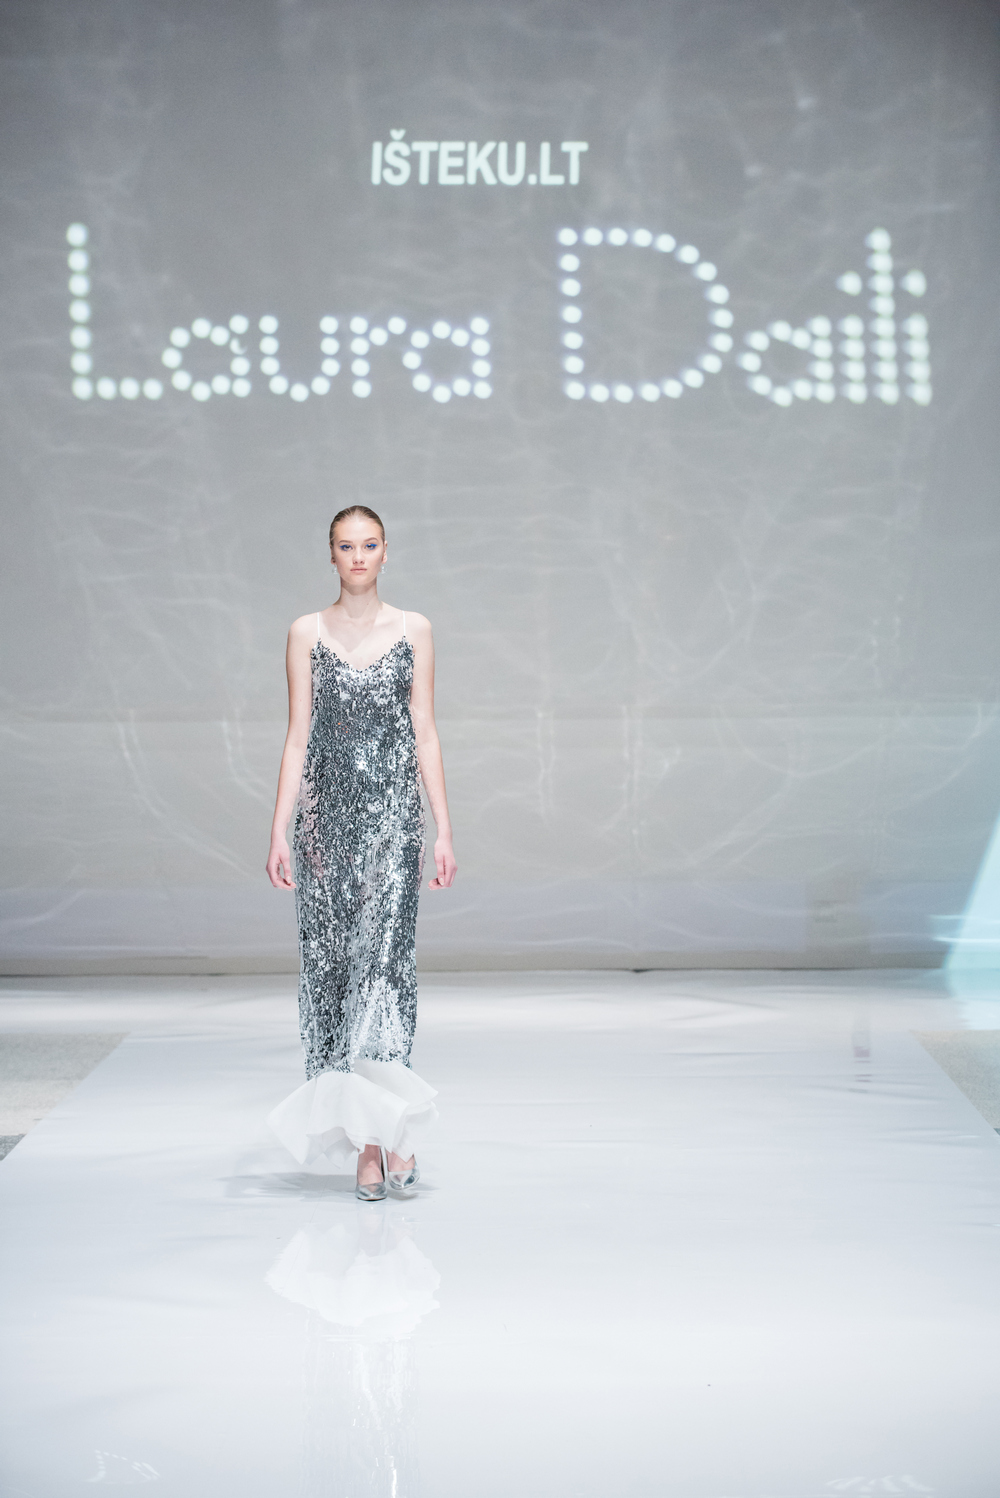 Laura Daili Bridal Collection 2017 Isteku lt (22)